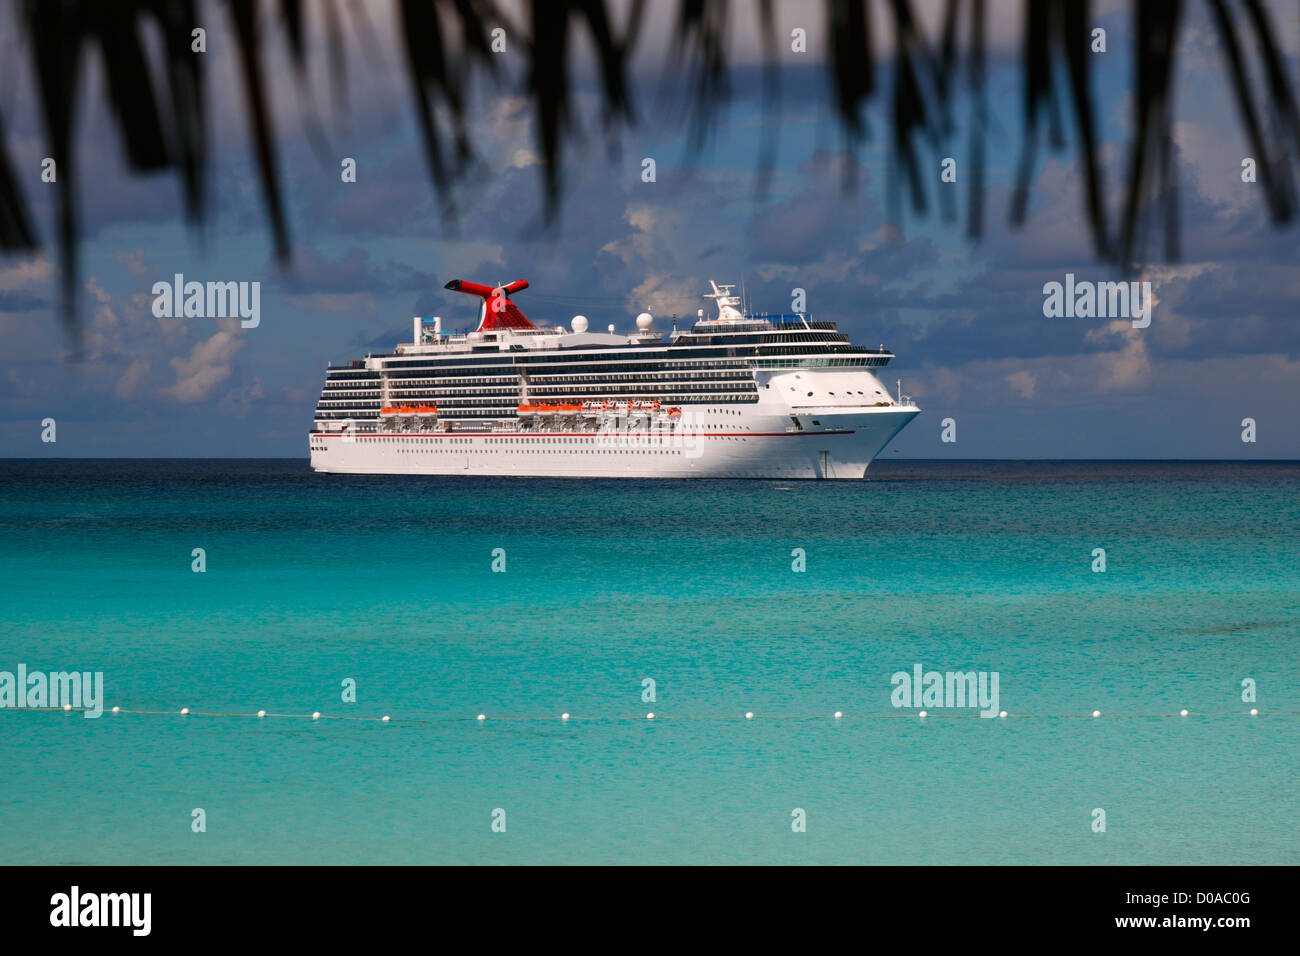 Cruise line ship in Caribbean sea Stock Photo